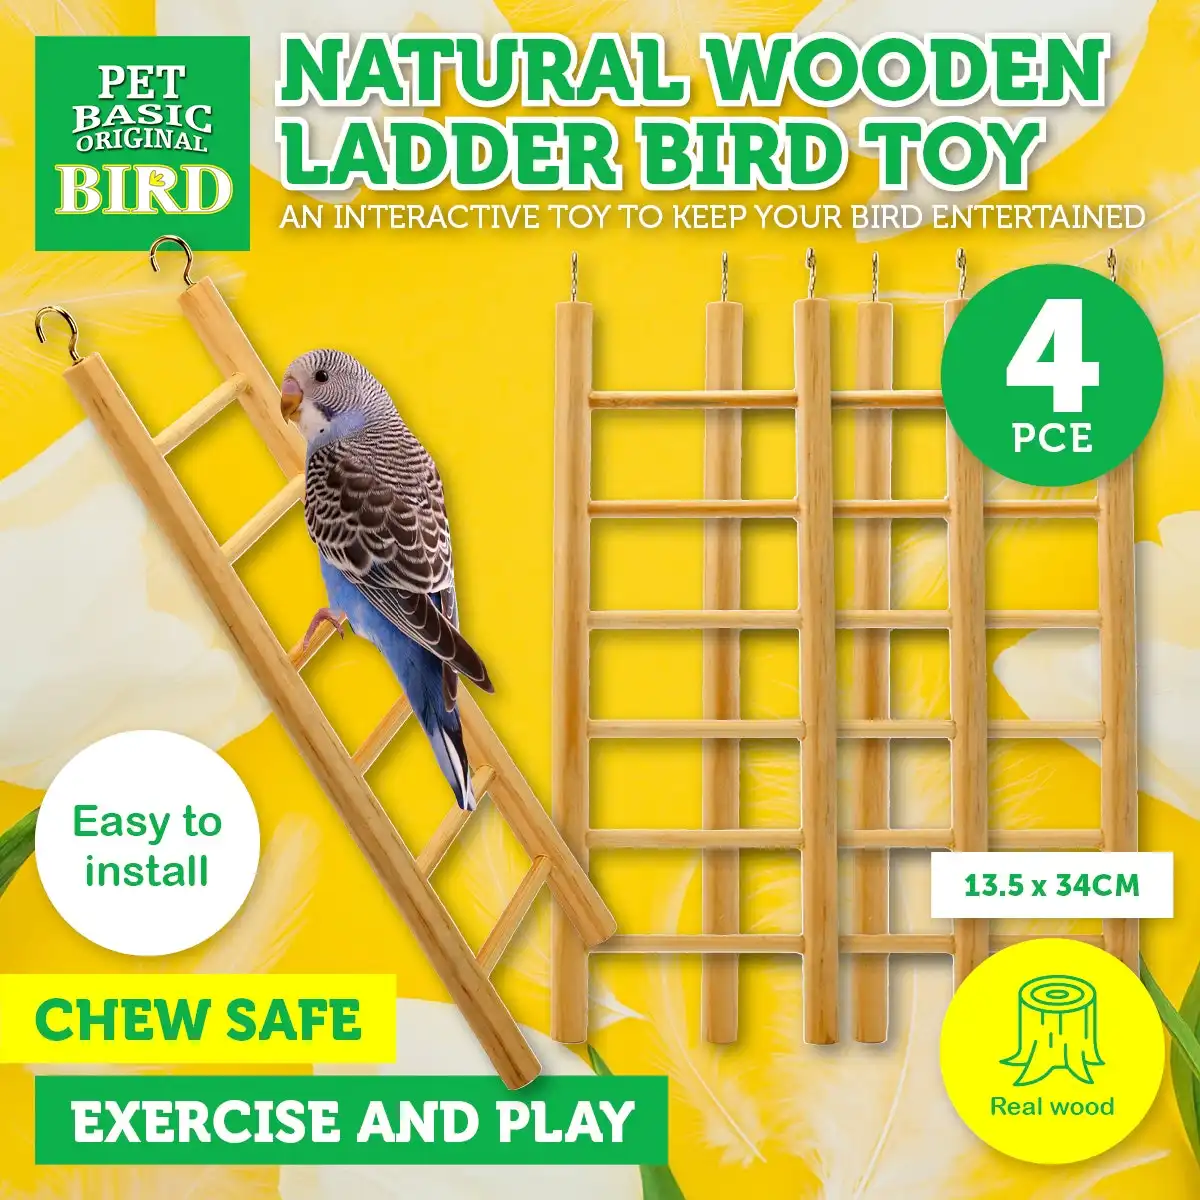 Pet Basic® 4PCE Wooden Ladder Bird Toy Natural Wood Stimulating 13.5 x 34cm